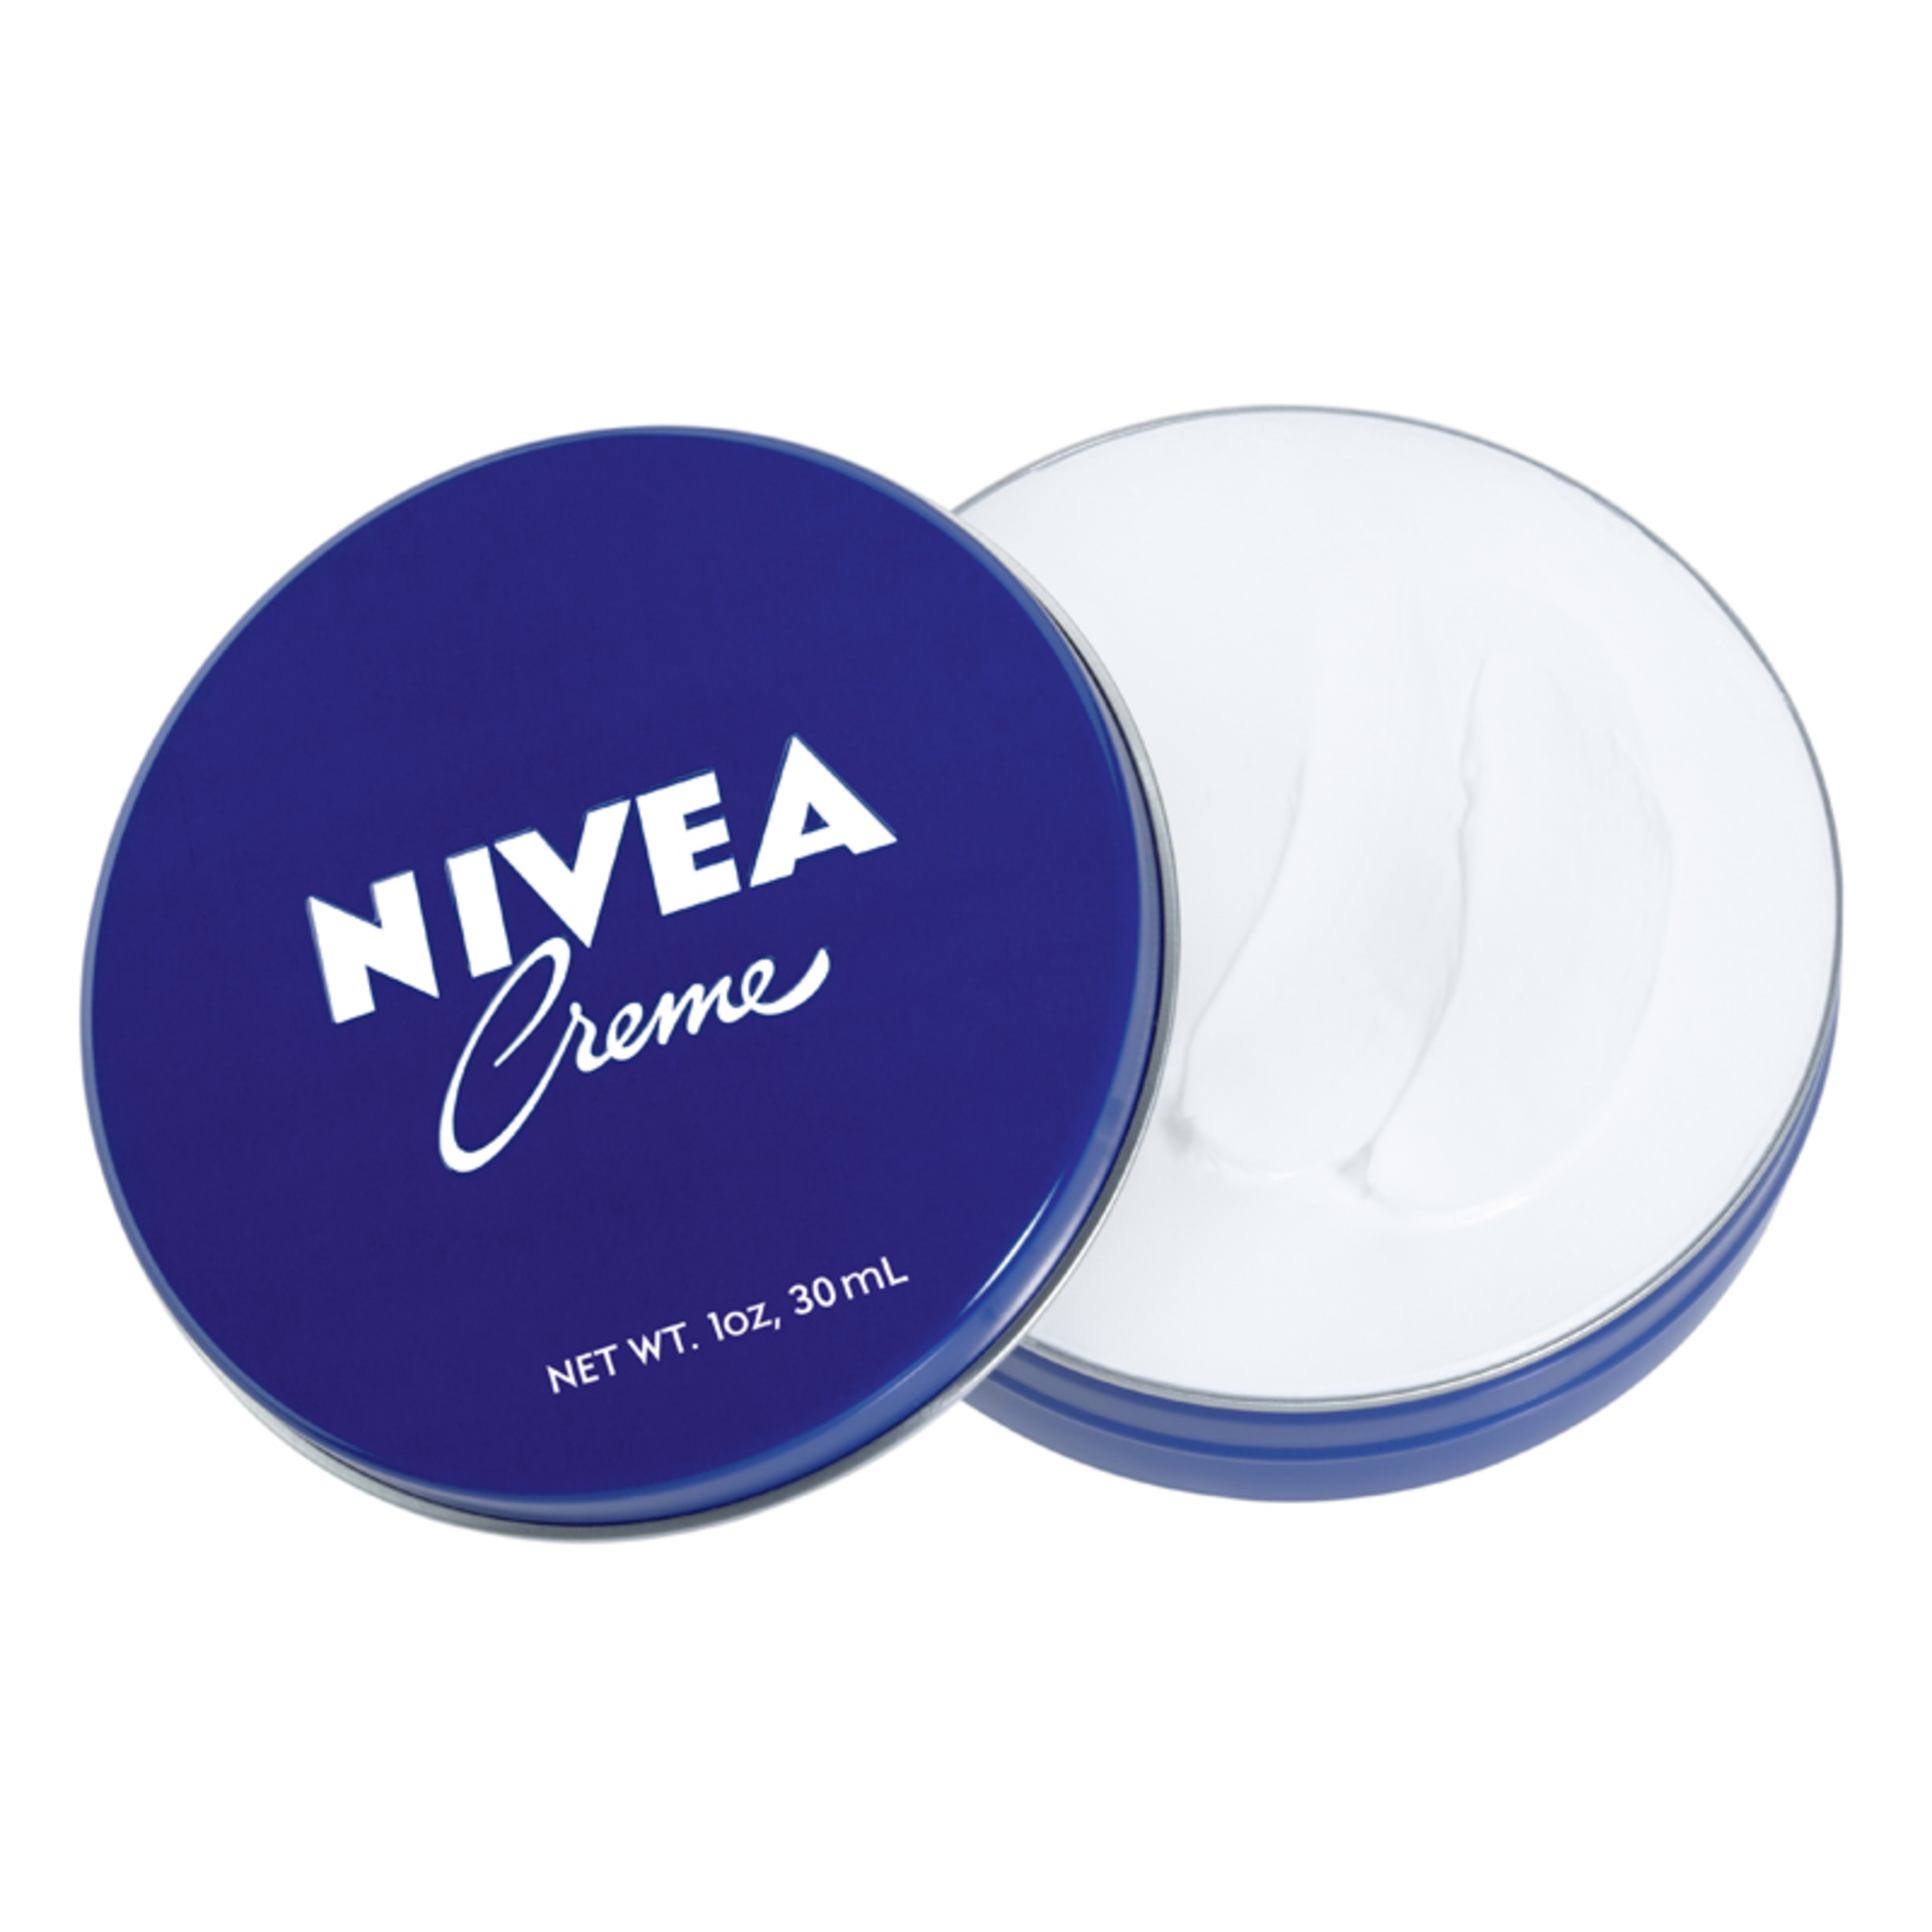 NIVEA Creme Body, Face and Hand Moisturizing Cream, 1 Oz Tin - image 3 of 13